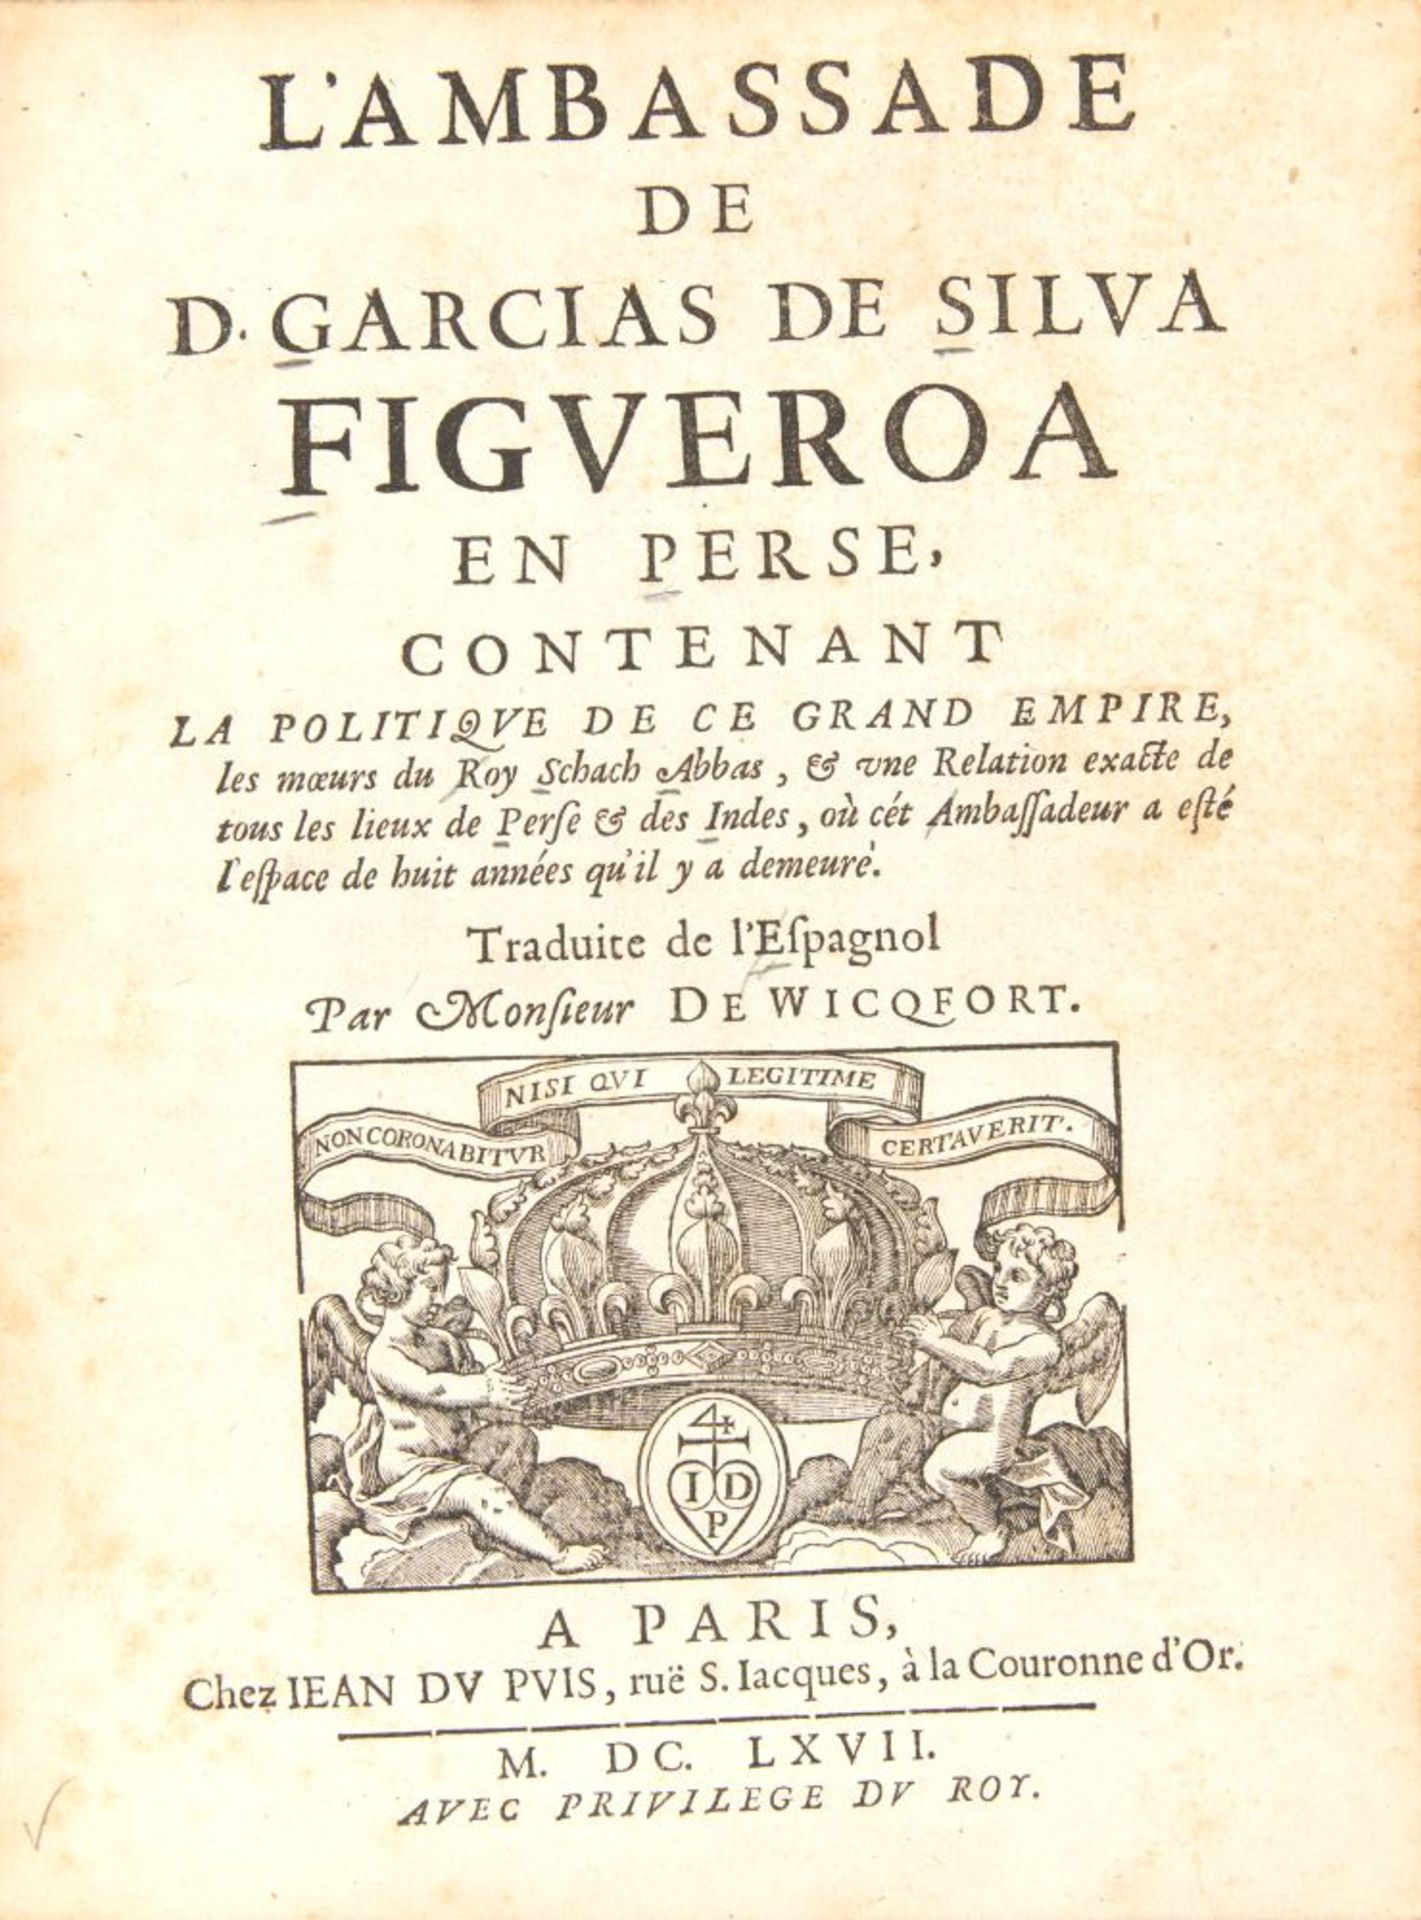 G. de Silva y Figueroa, L'Ambassade en Perse. Paris 1667